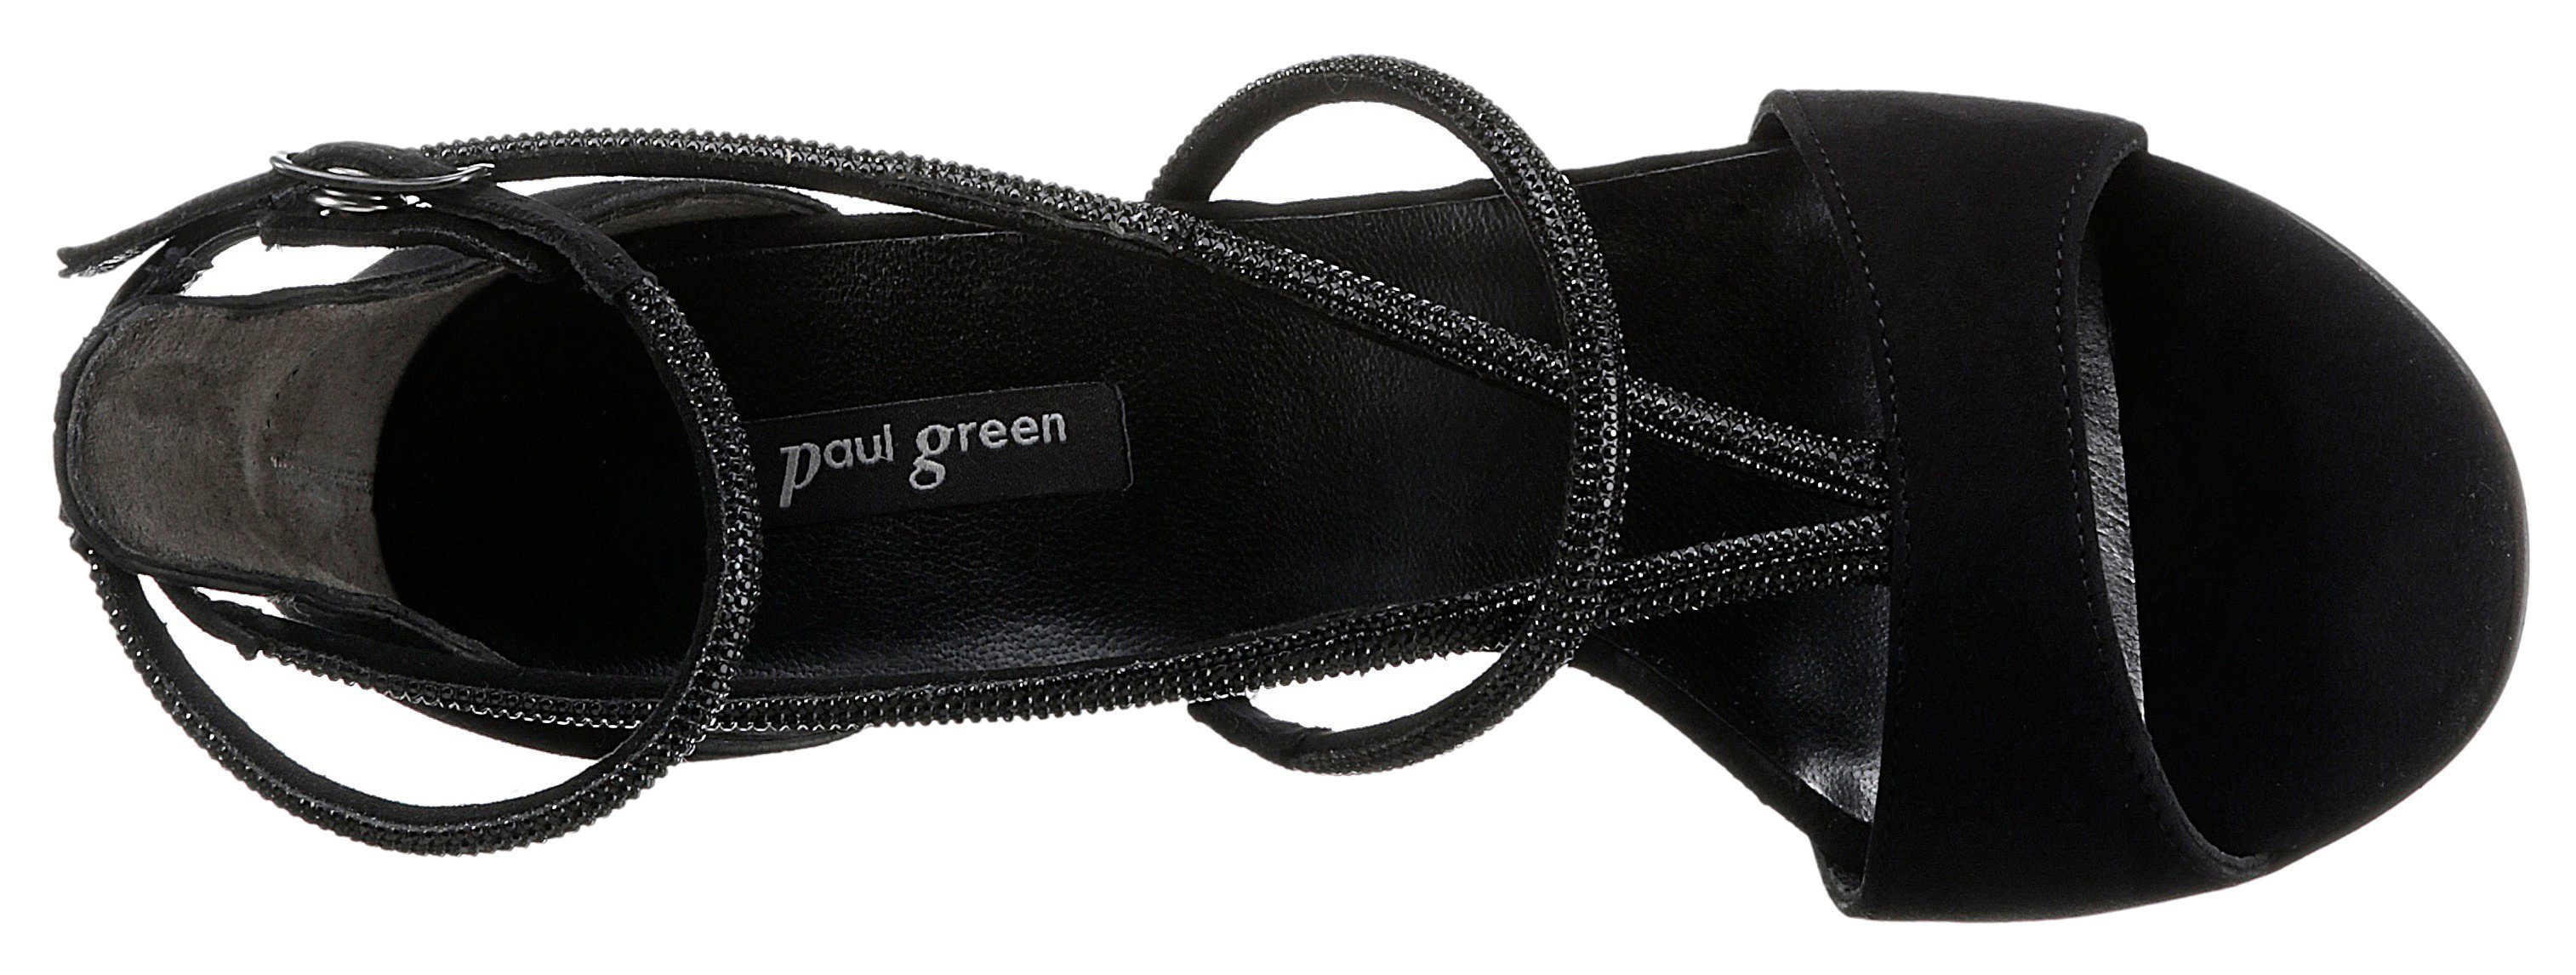 schwarz Green Optik Sandalette eleganter Paul in